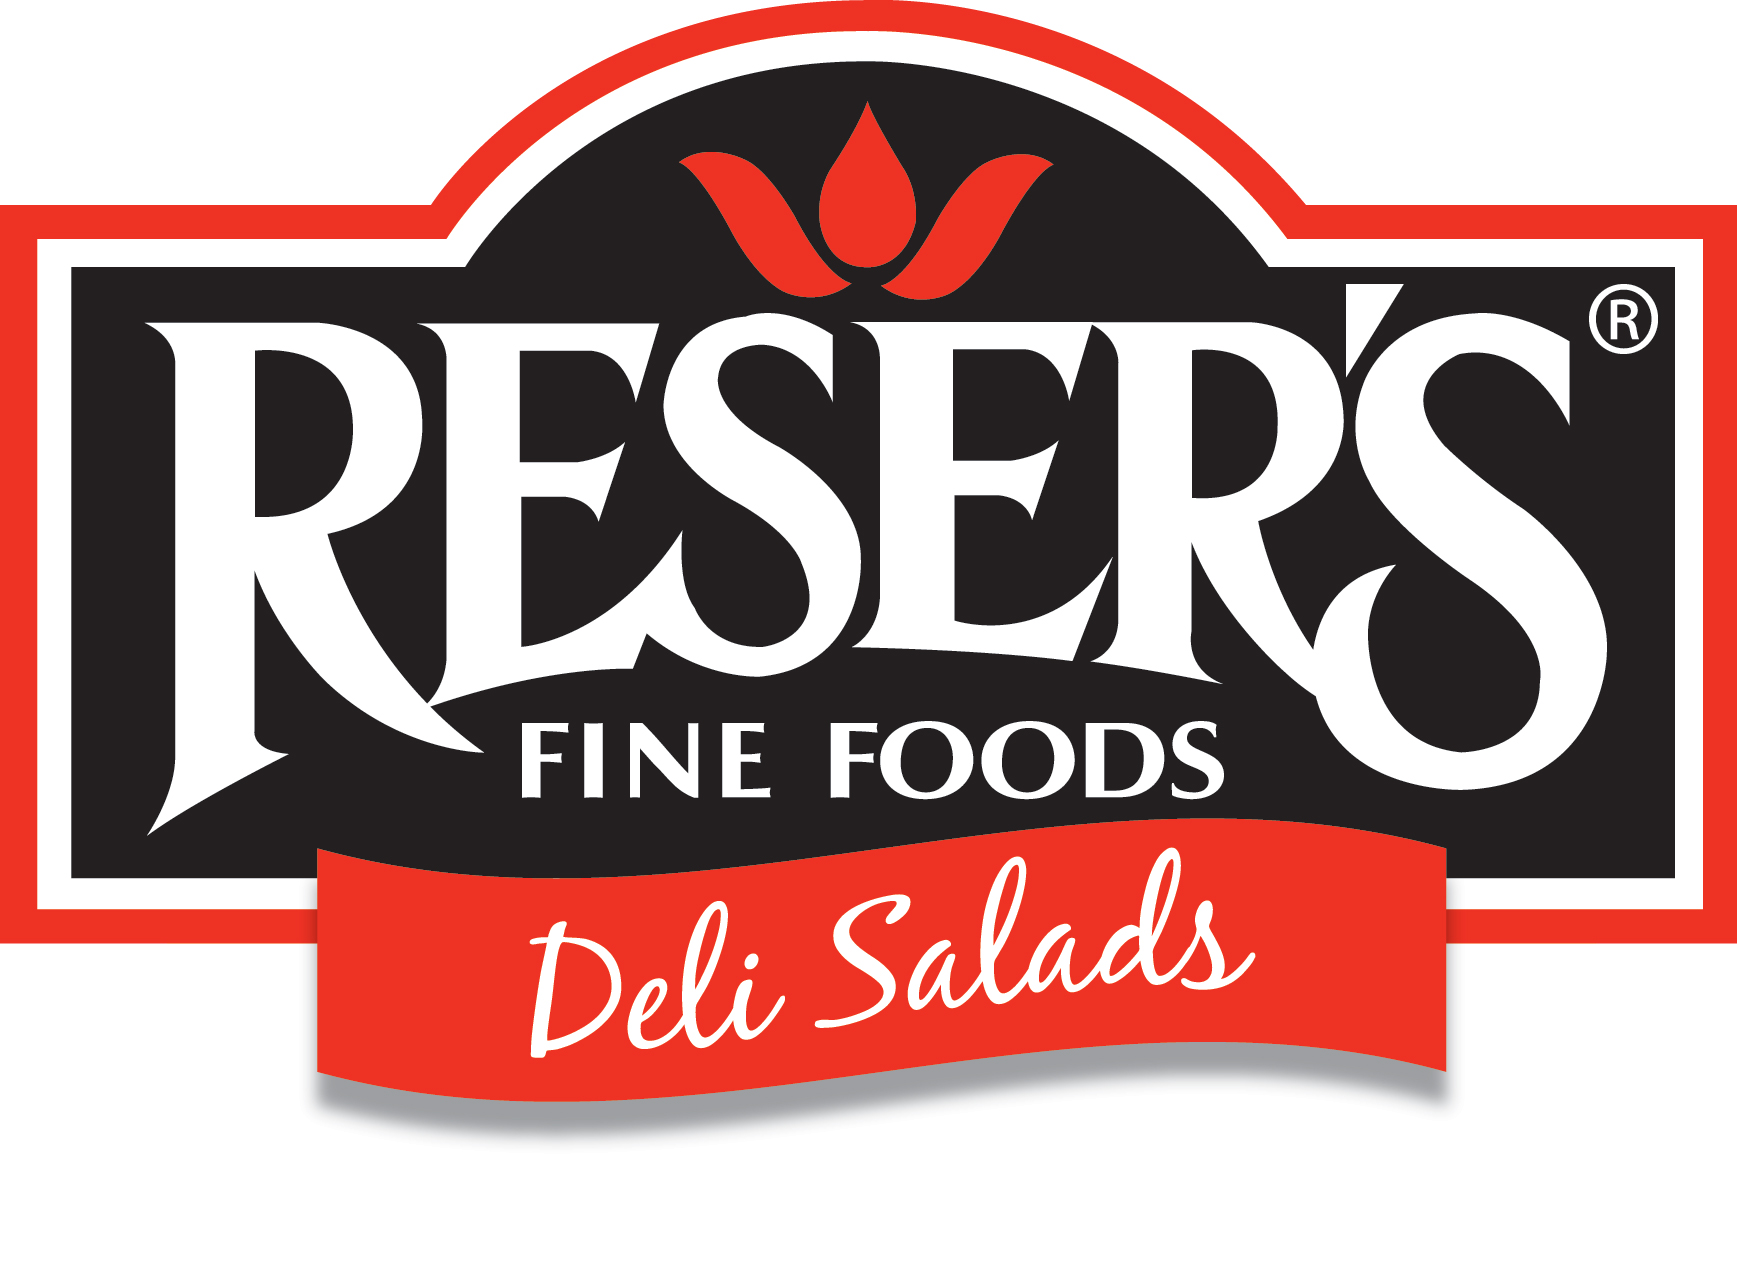 Reser's American Classics Deli Salads